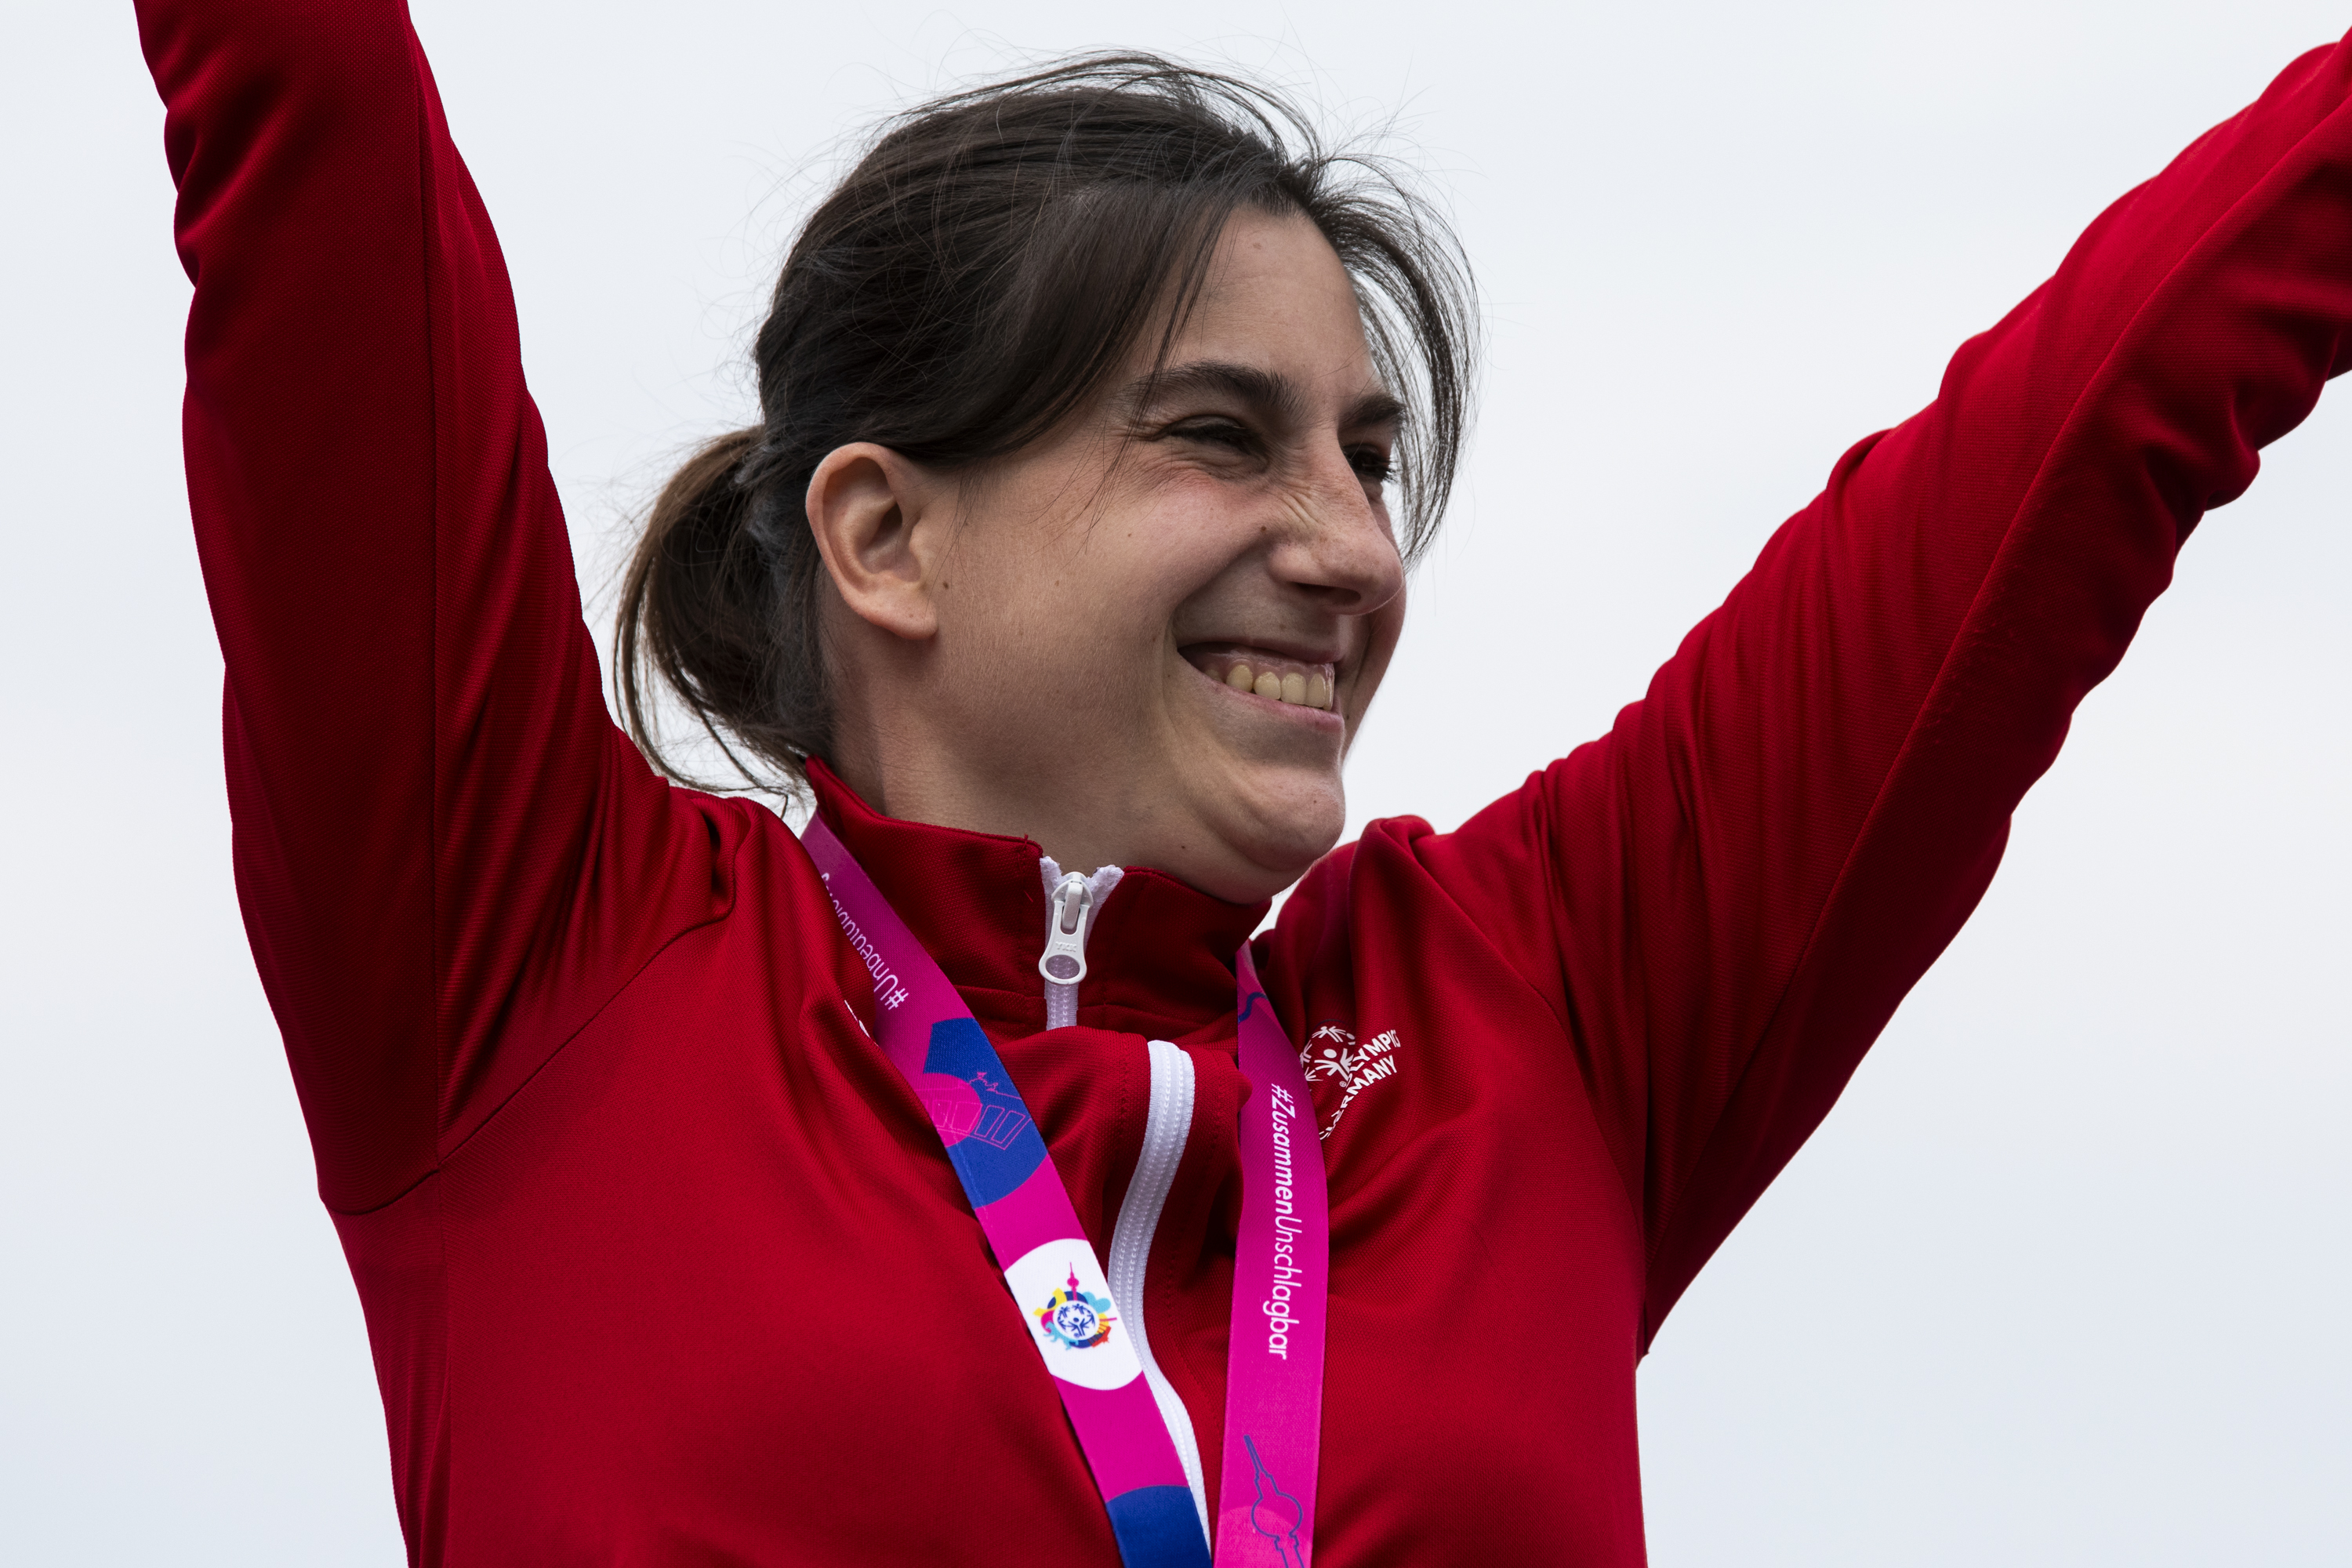 Patrizia Spaulding mit Goldmedaille in roter Trainingsjacke reißt beide Arme hoch und lacht.